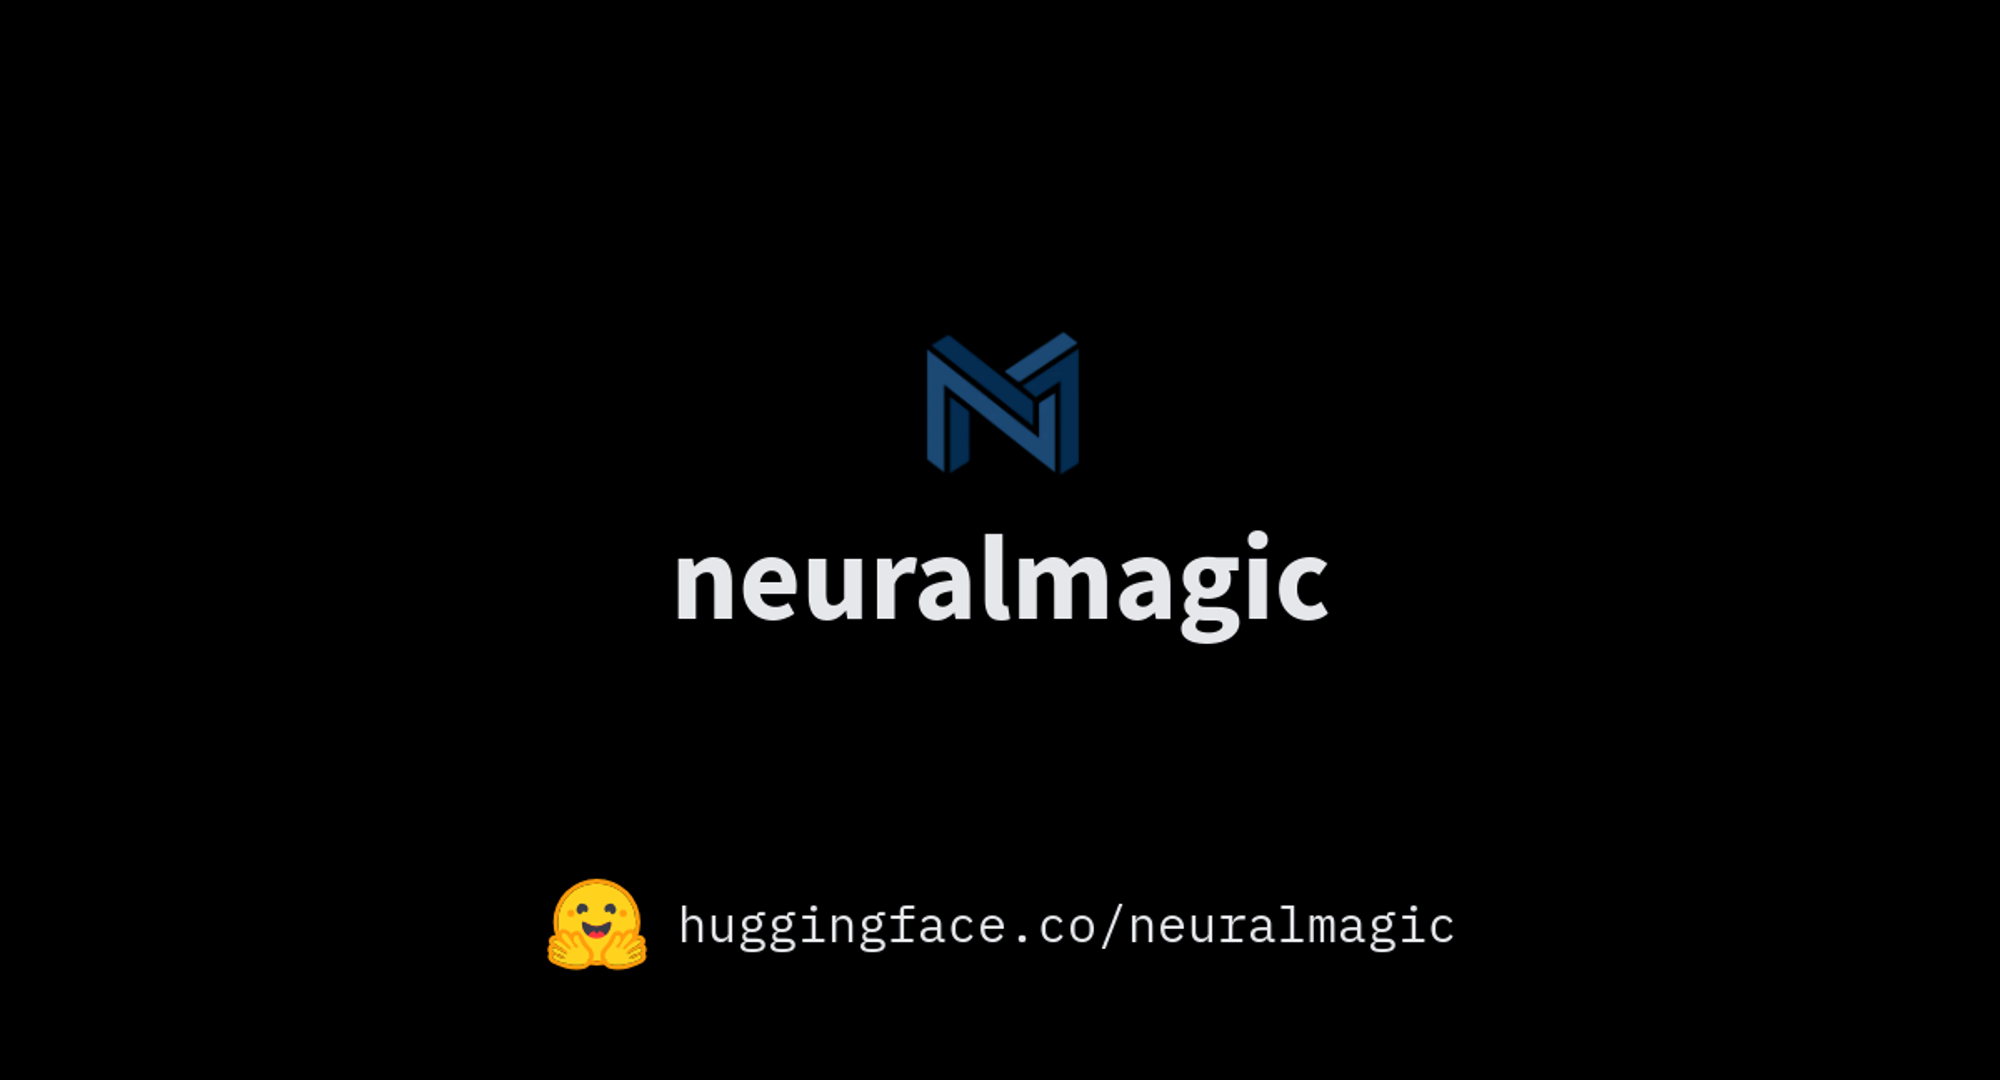 neuralmagic (Neural Magic)